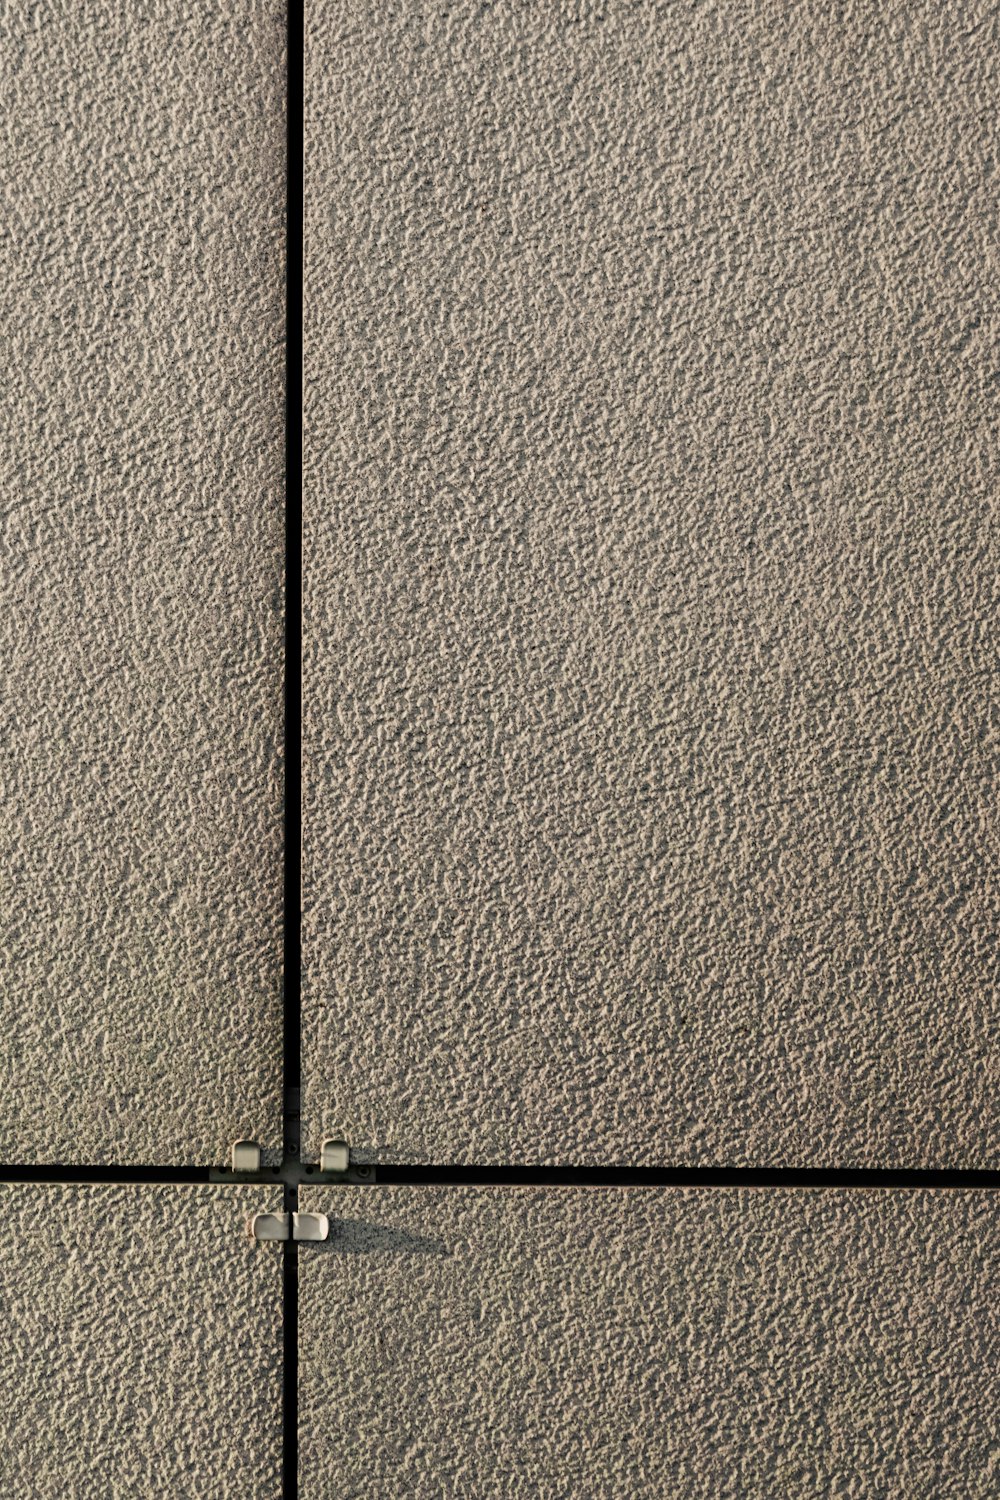 black metal rod on brown concrete wall